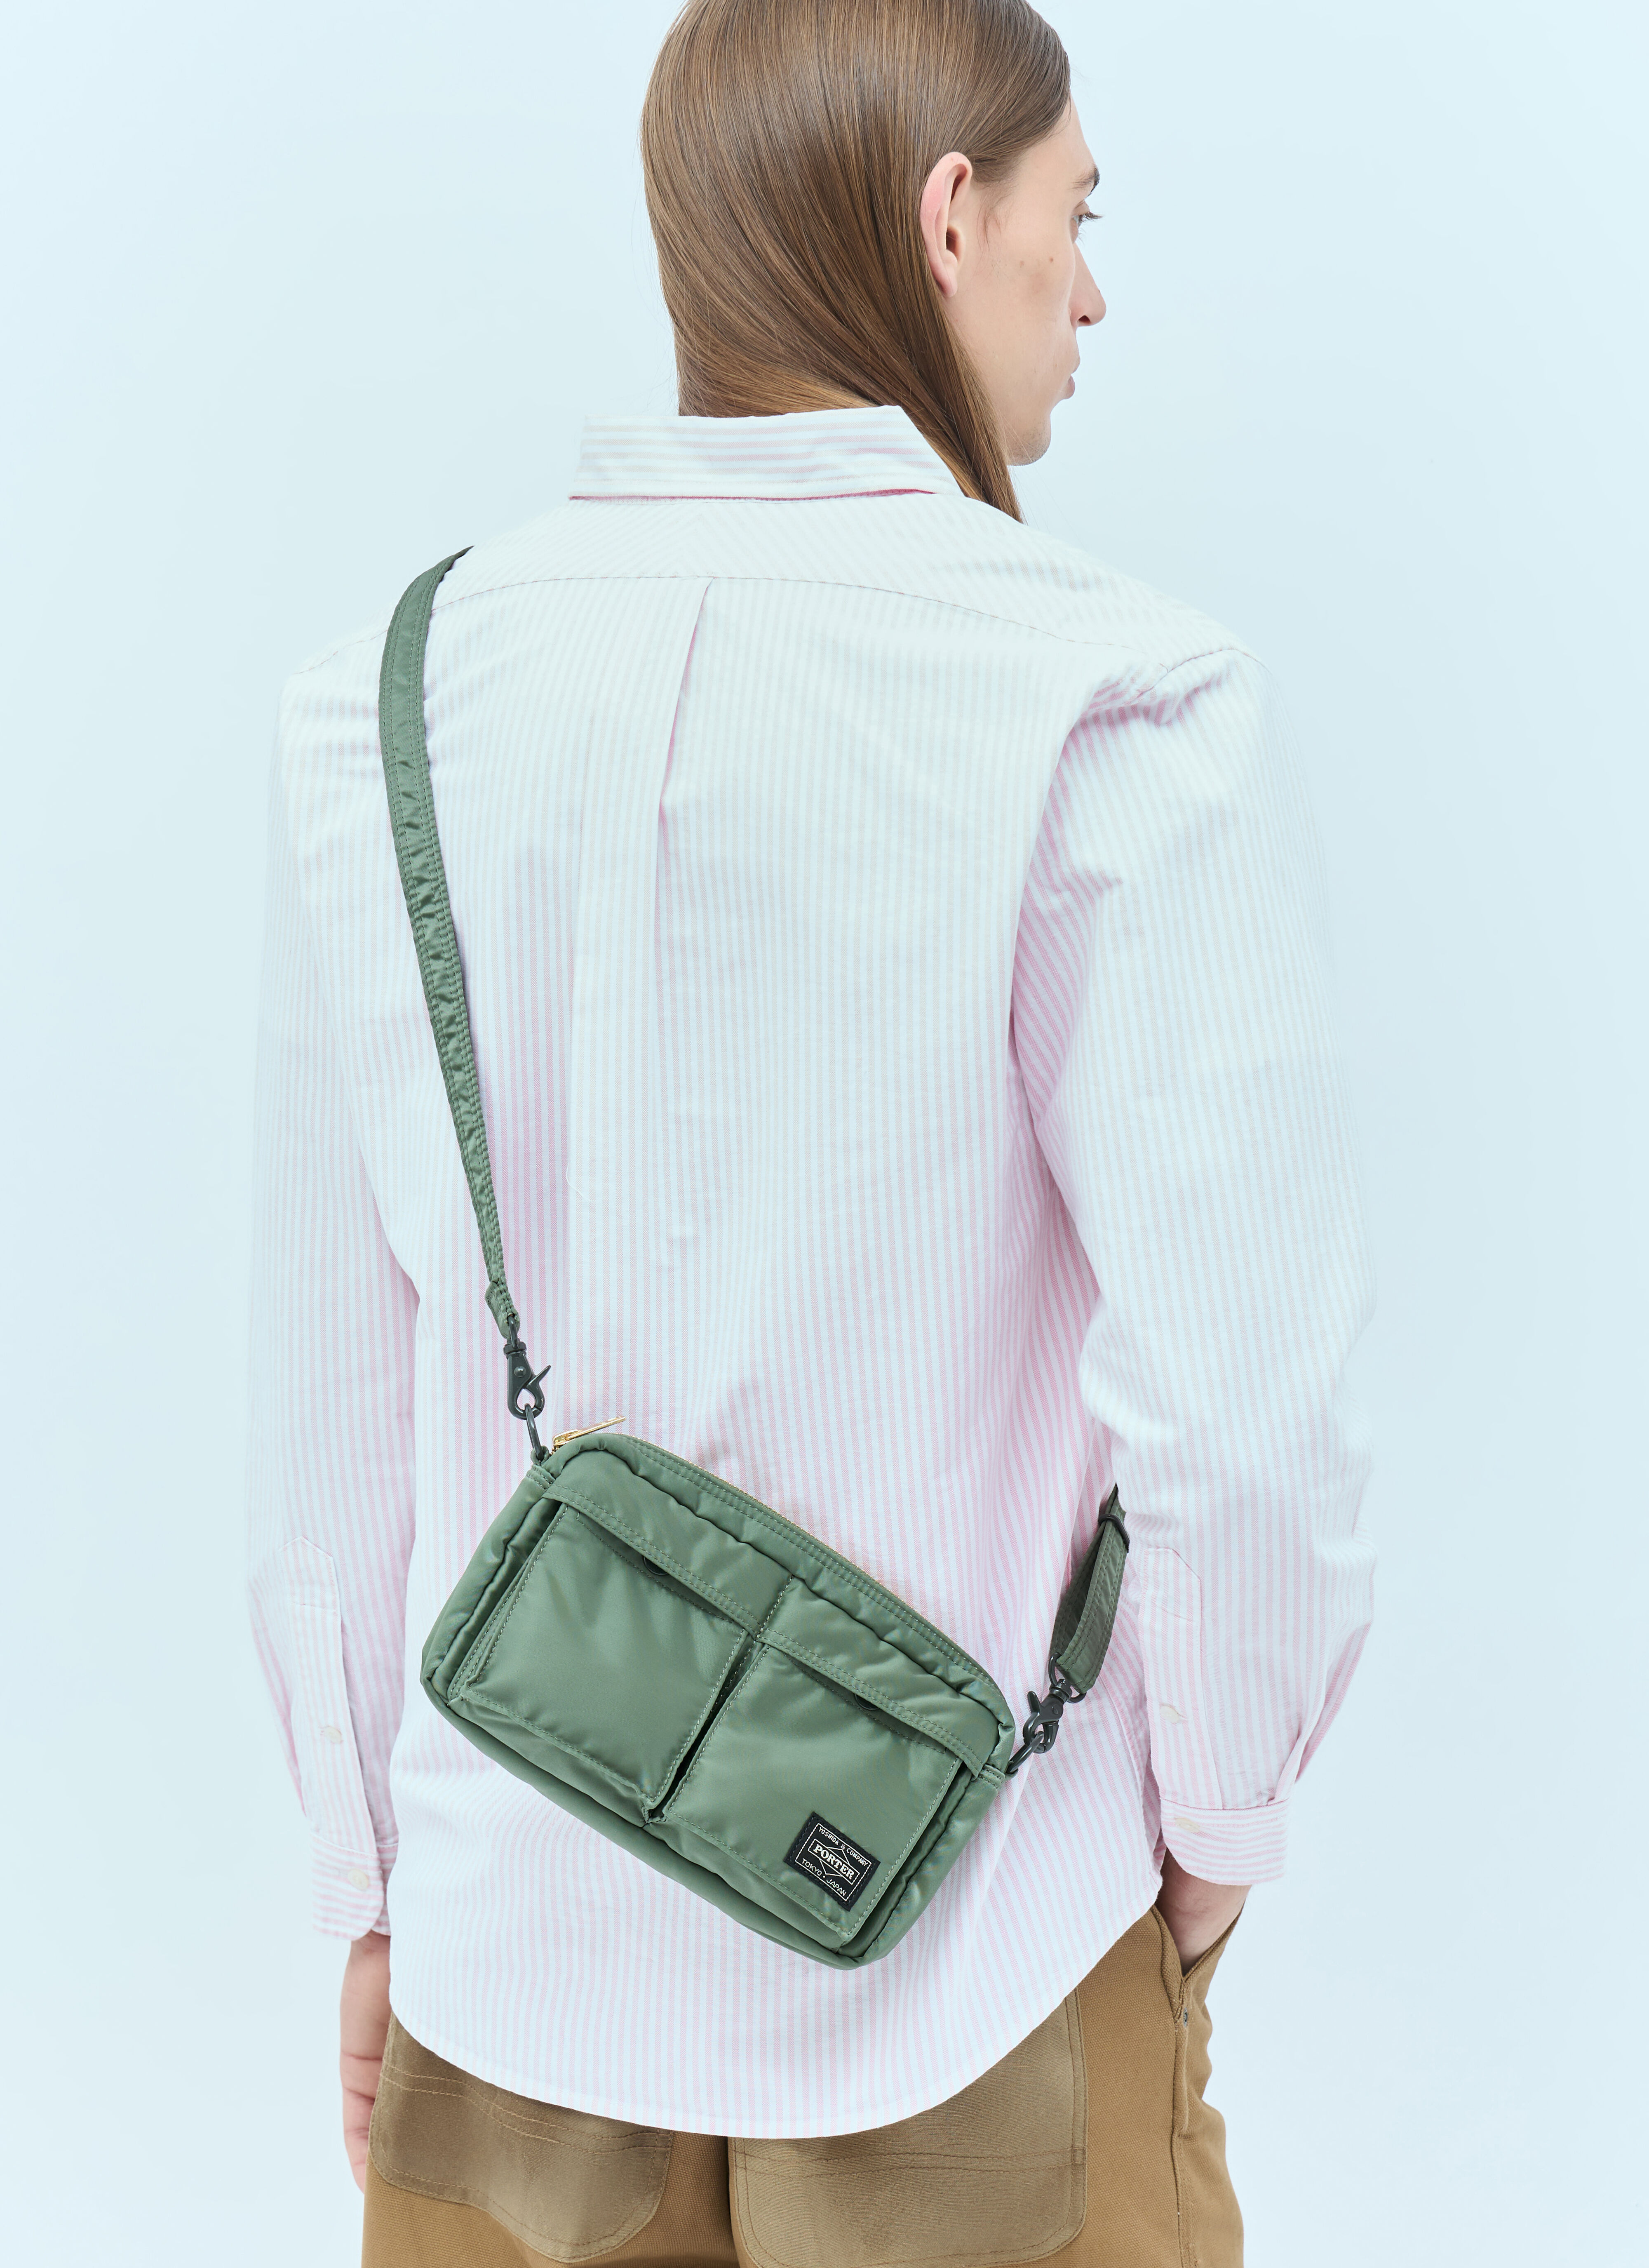 Porter-Yoshida & Co Tanker Shoulder Bag in Green | LN-CC®